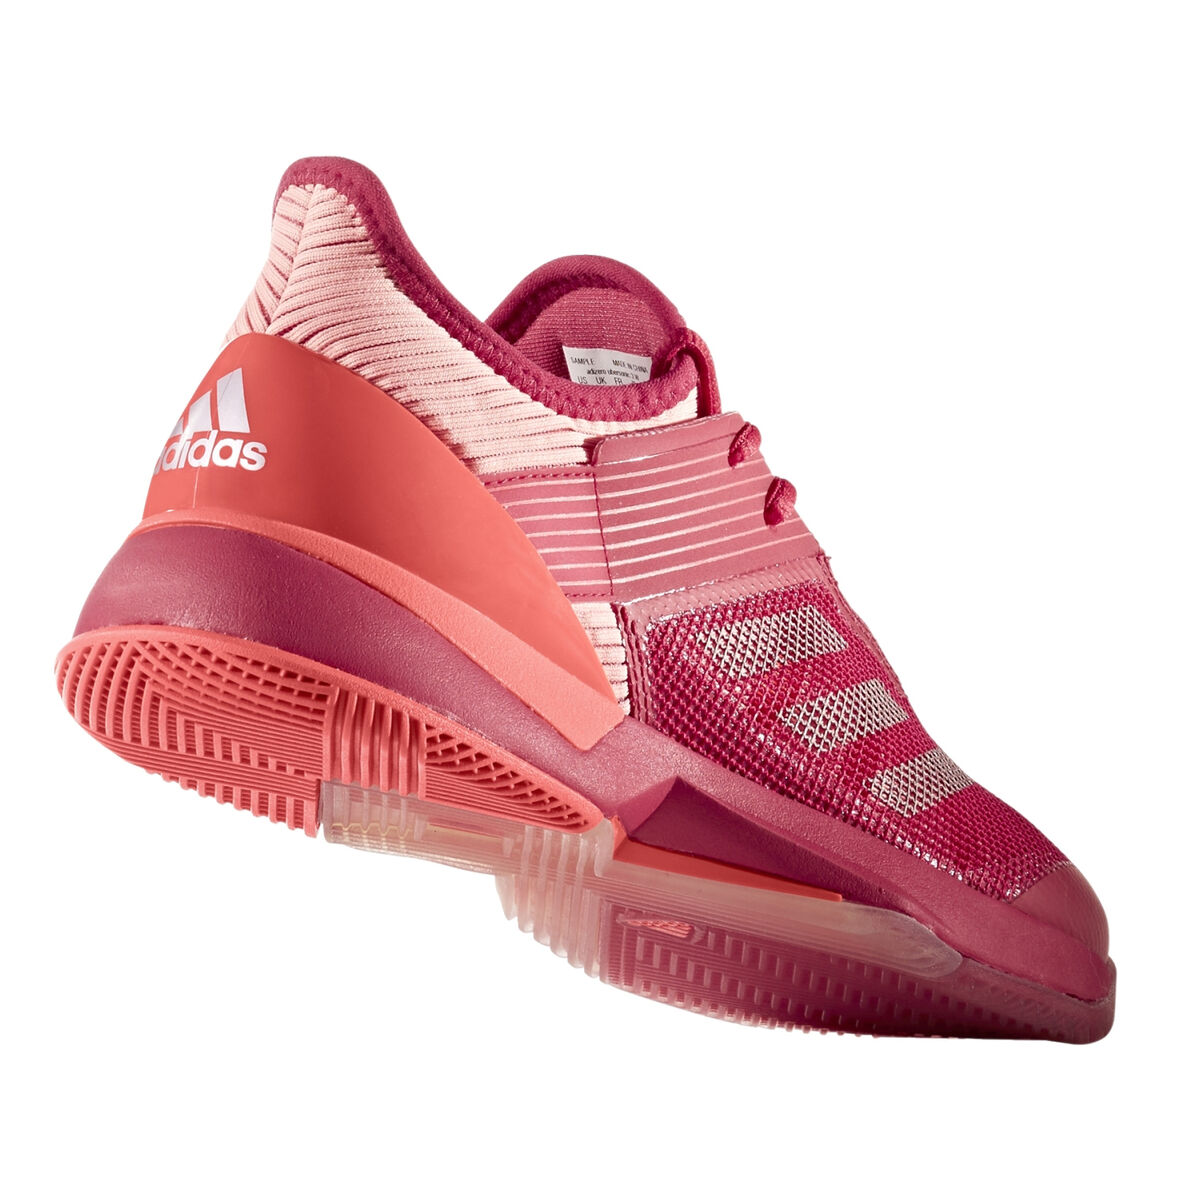 Adidas Adizero Ubersonic 3 Womens Tennis Shoes Pink Pga Tour Superstore 9777